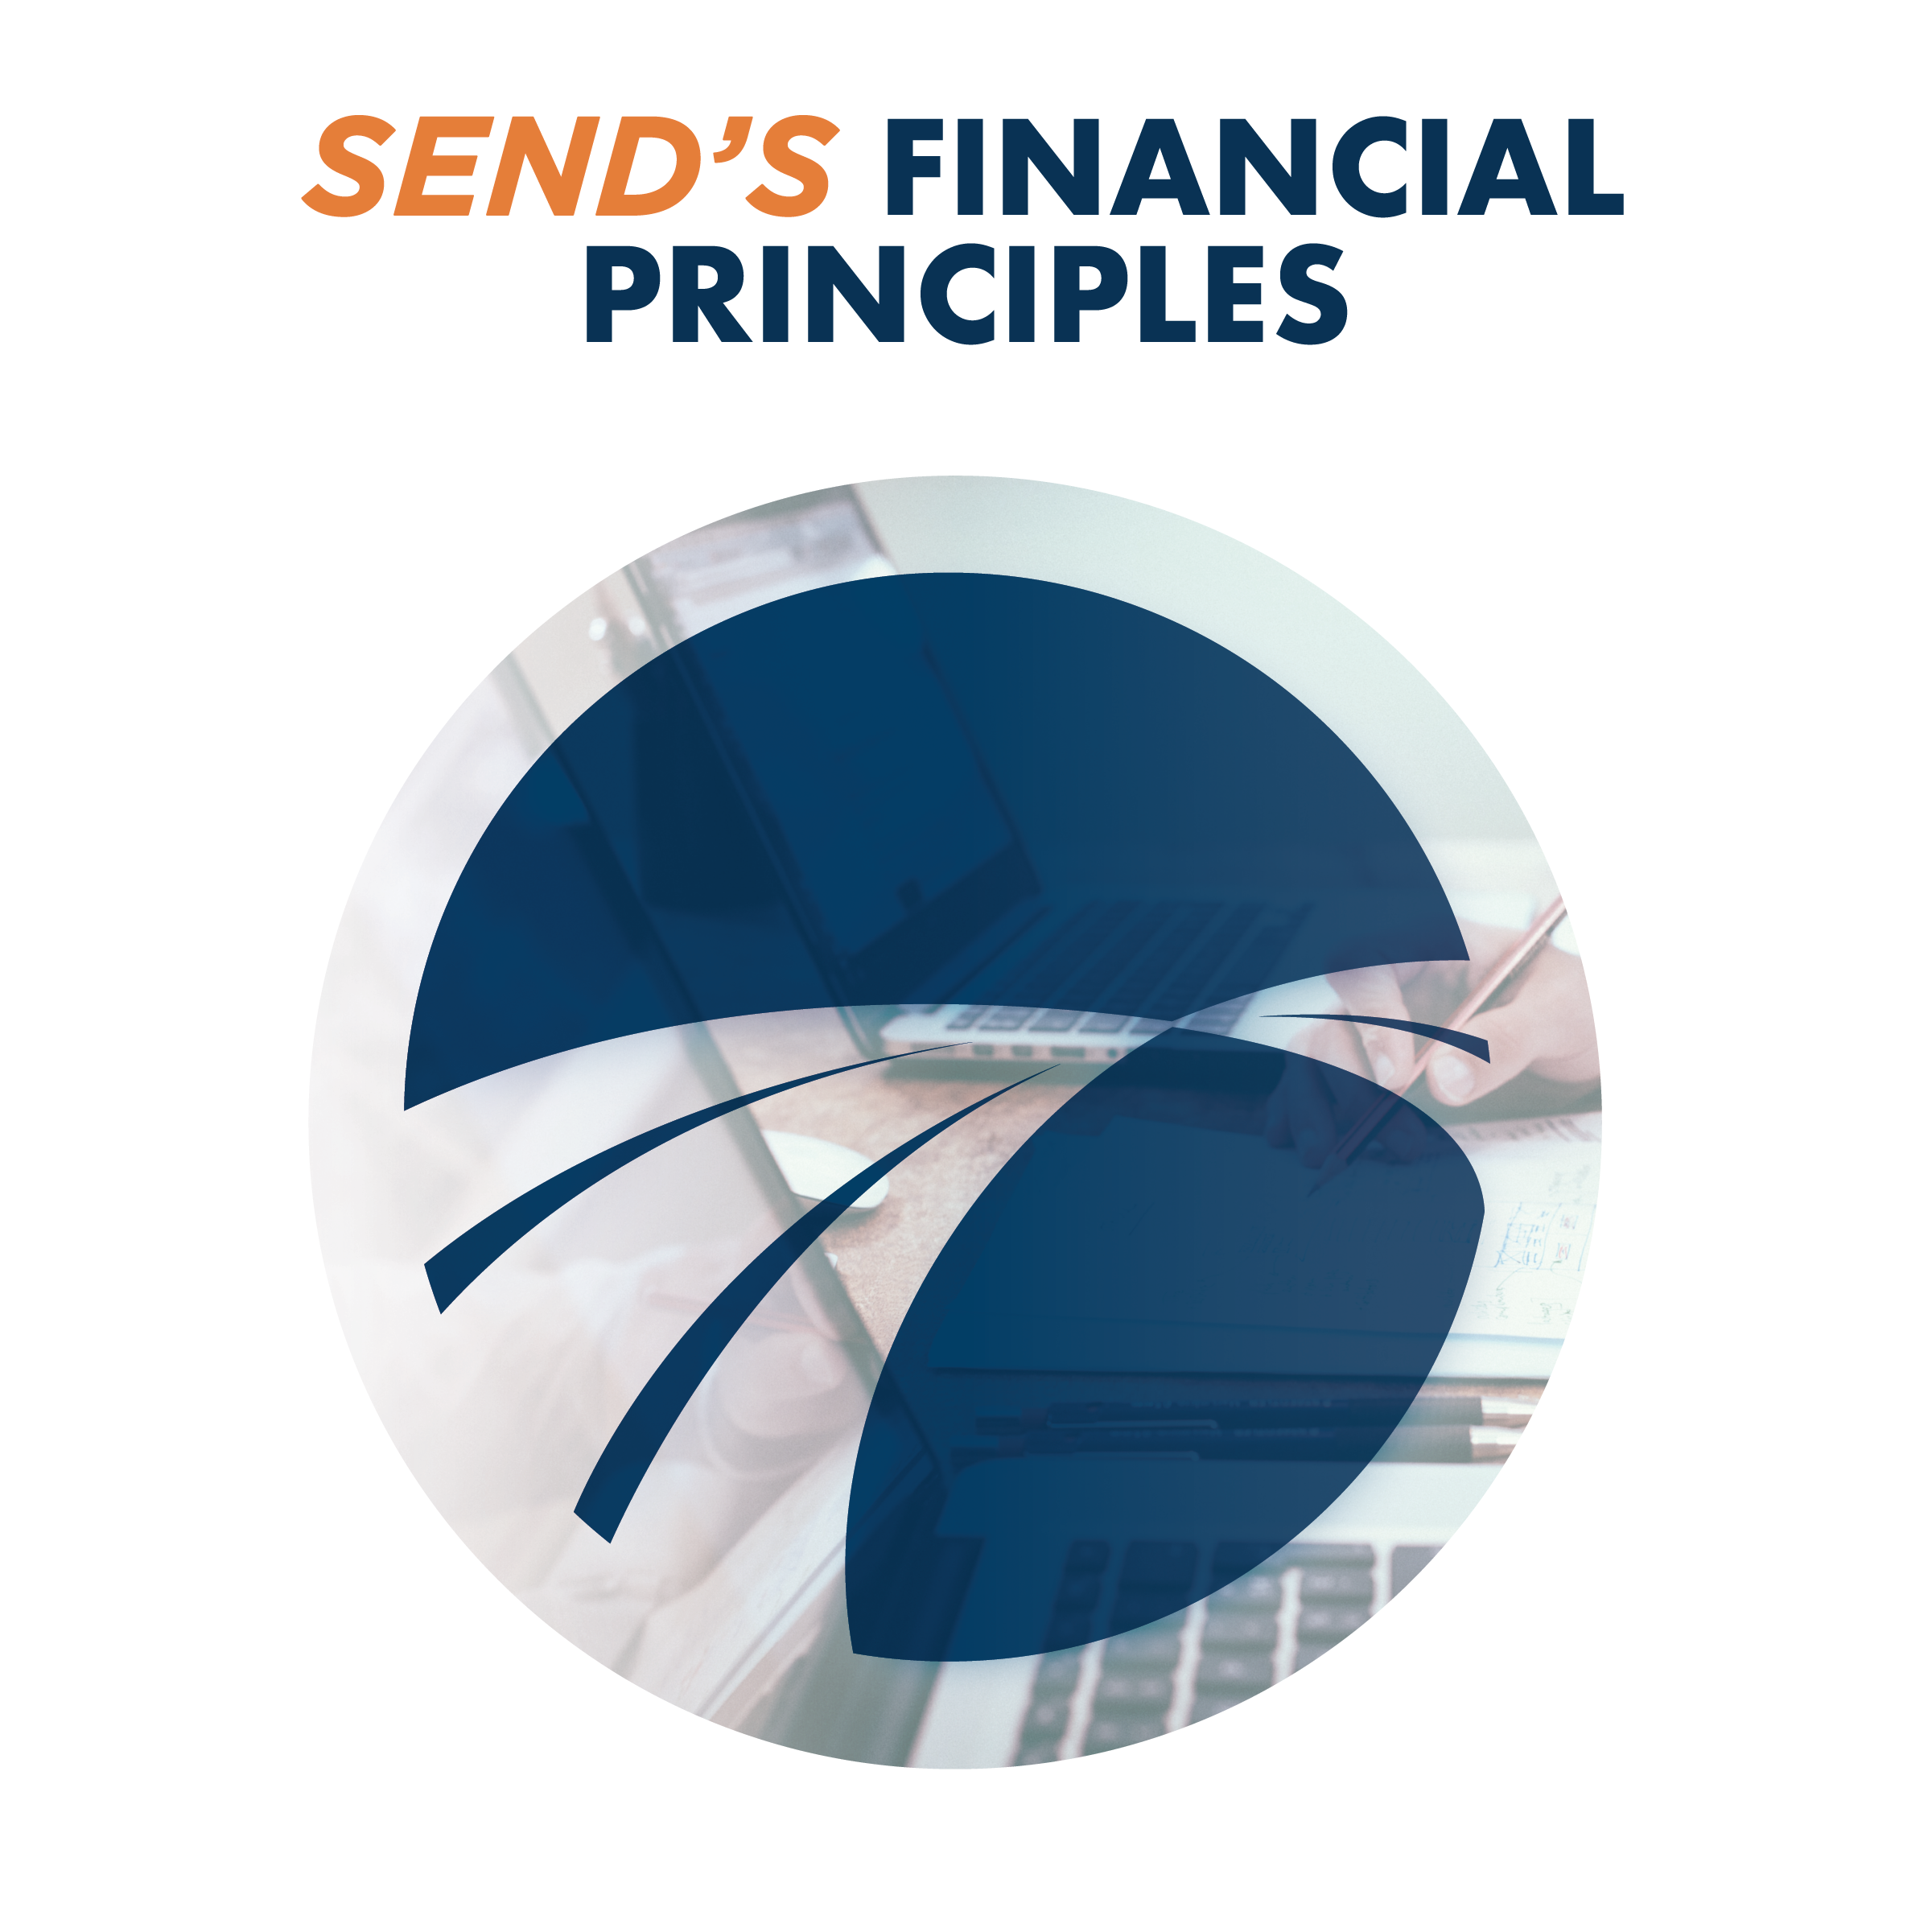 SEND's Financial Principles